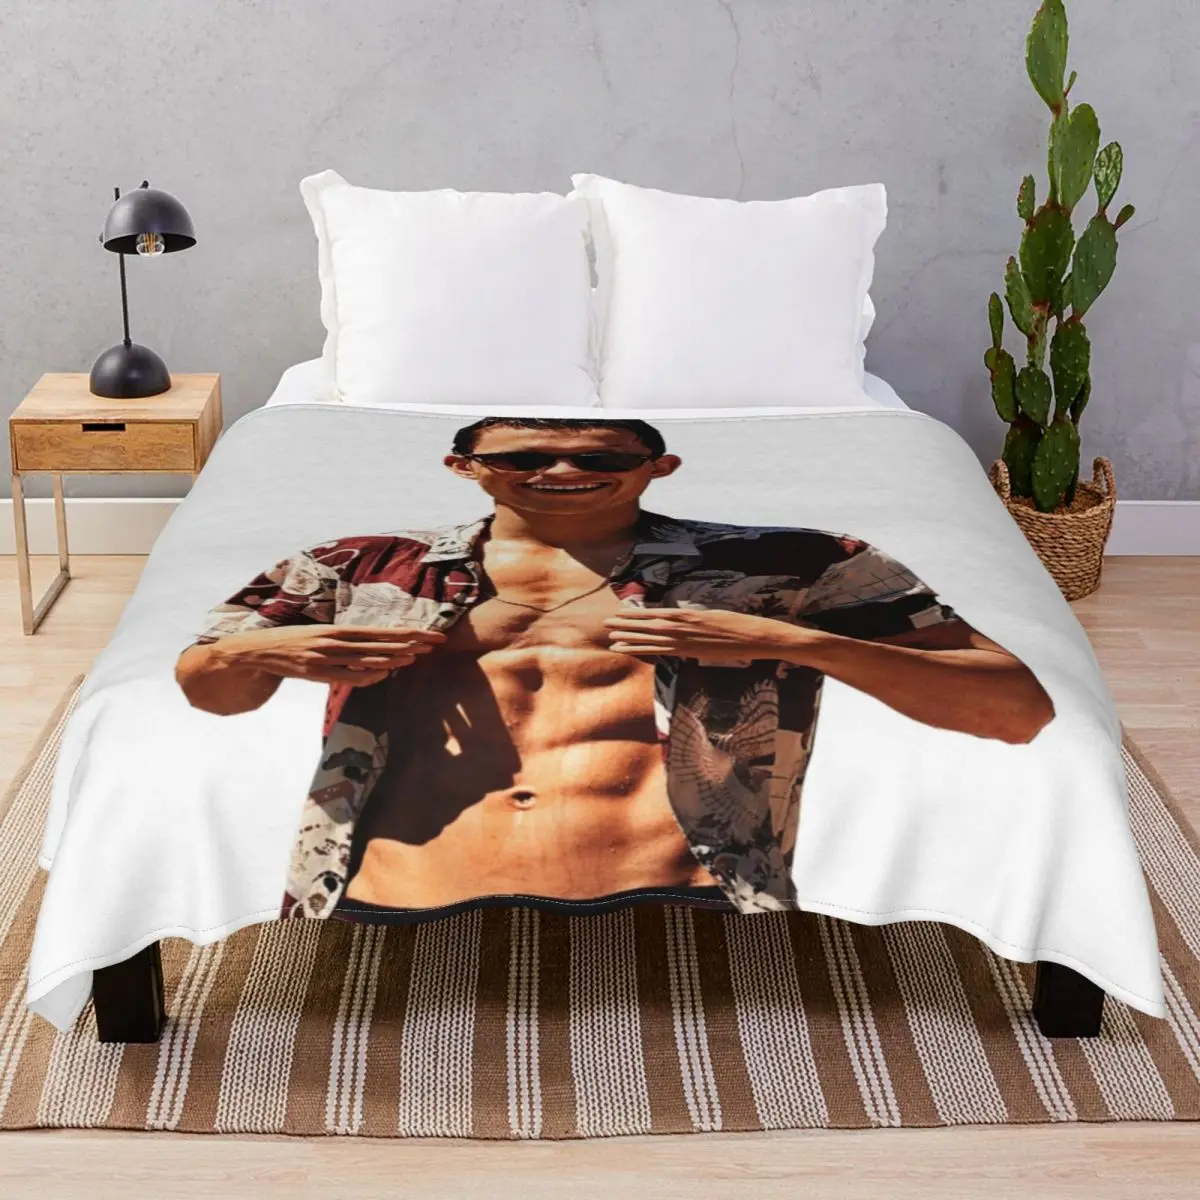 Tom Holland Shirtless Design Blanket Coral Fleece All Season Multi-function Throw Blankets for Bed Sofa Camp Cinema